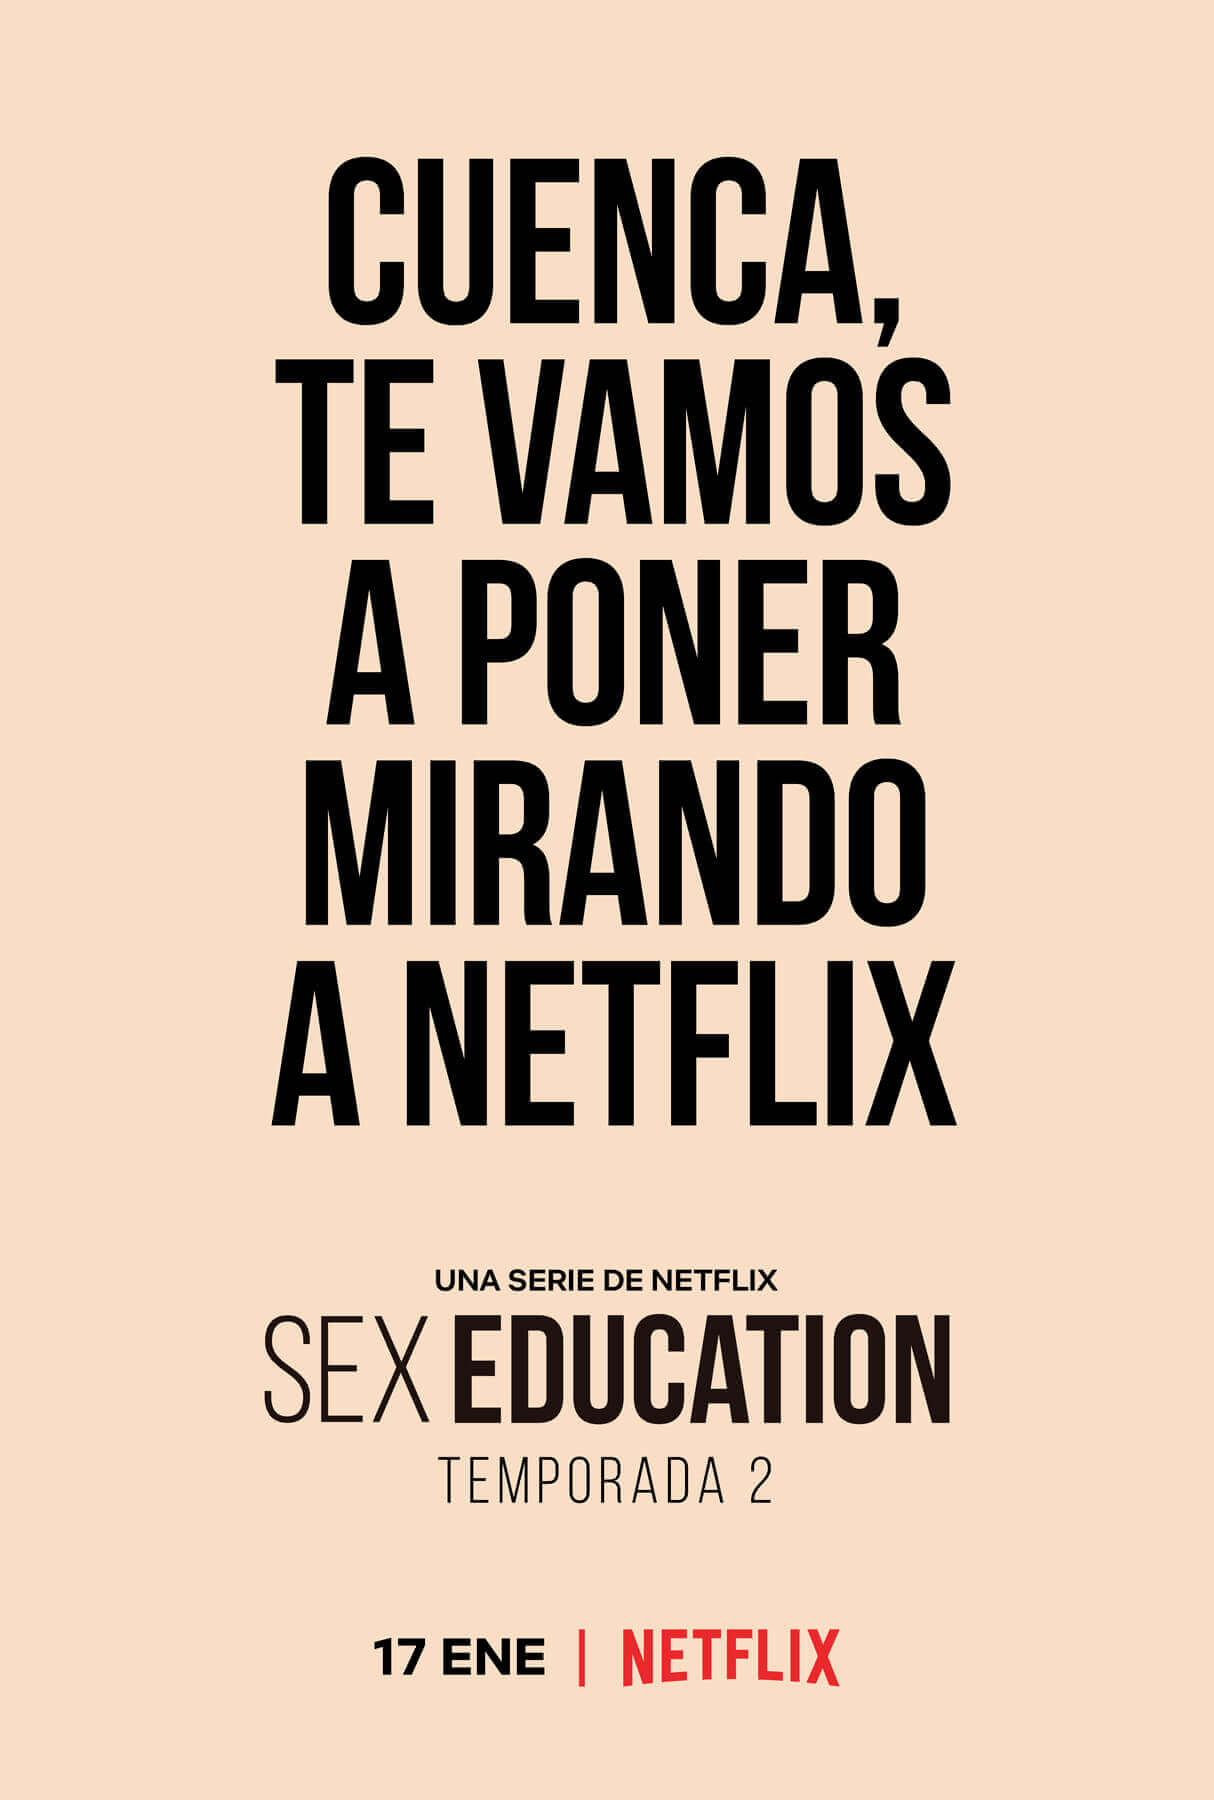 Cuenca, te vamos a poner mirando a Netflix